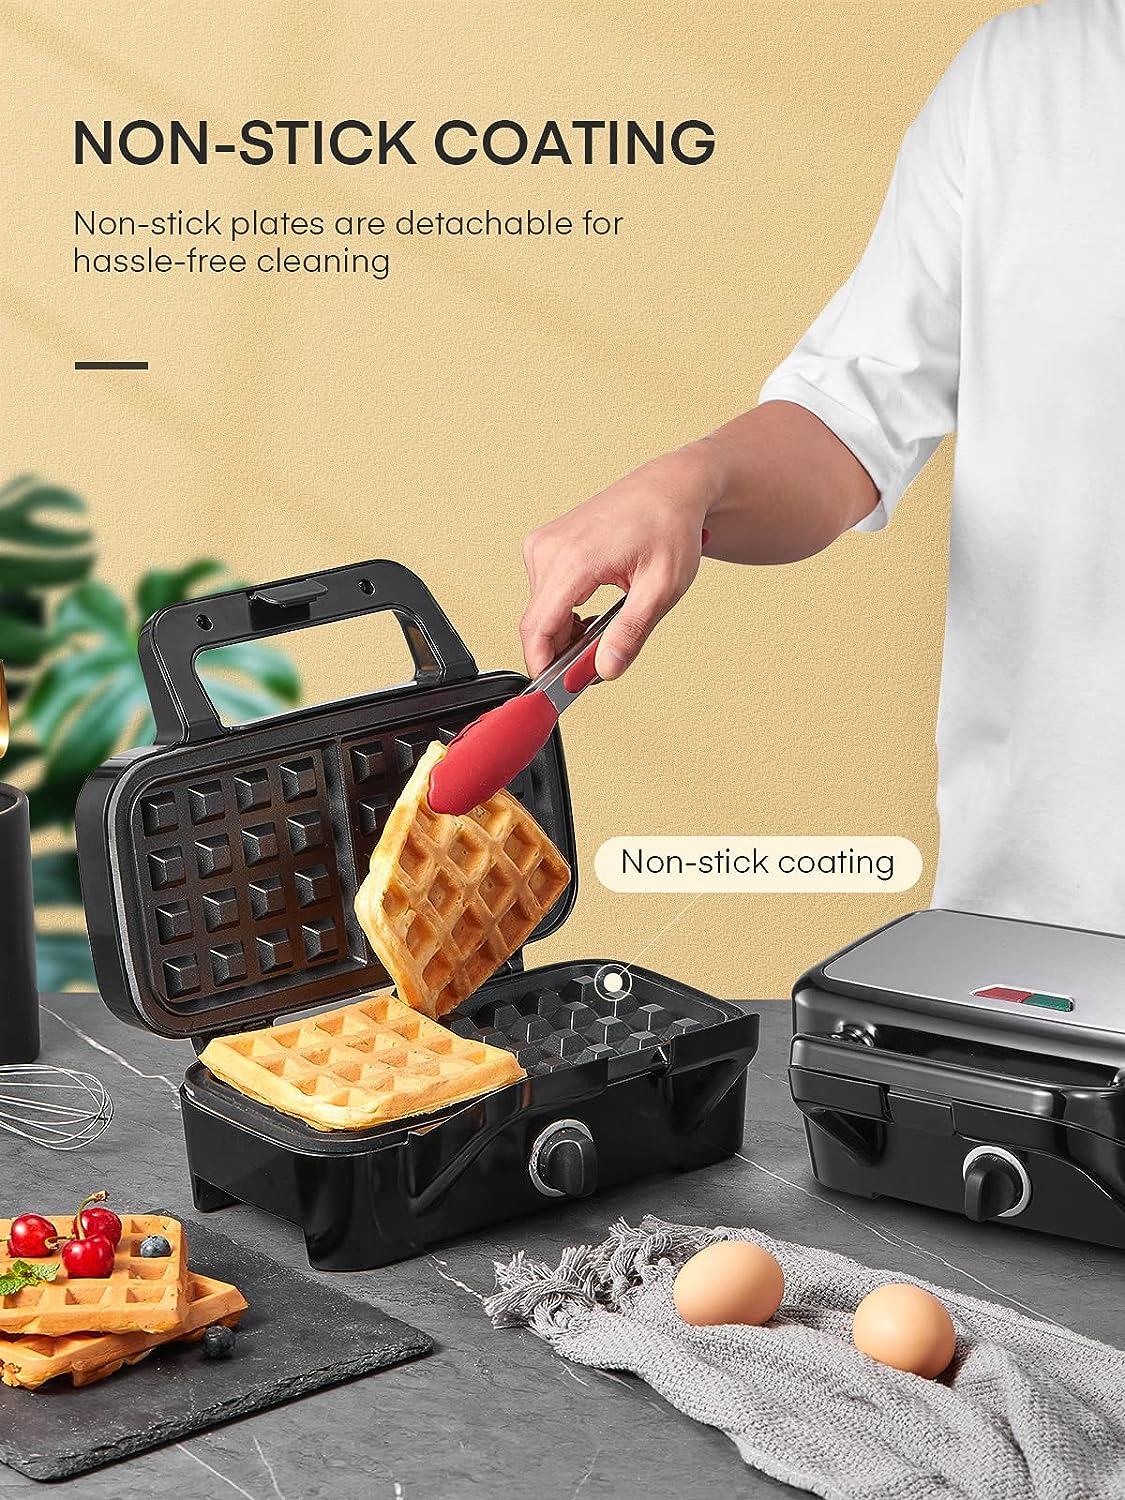 3 In 1 Detachable Mini Waffle Maker - Buy 3 In 1 Detachable Mini